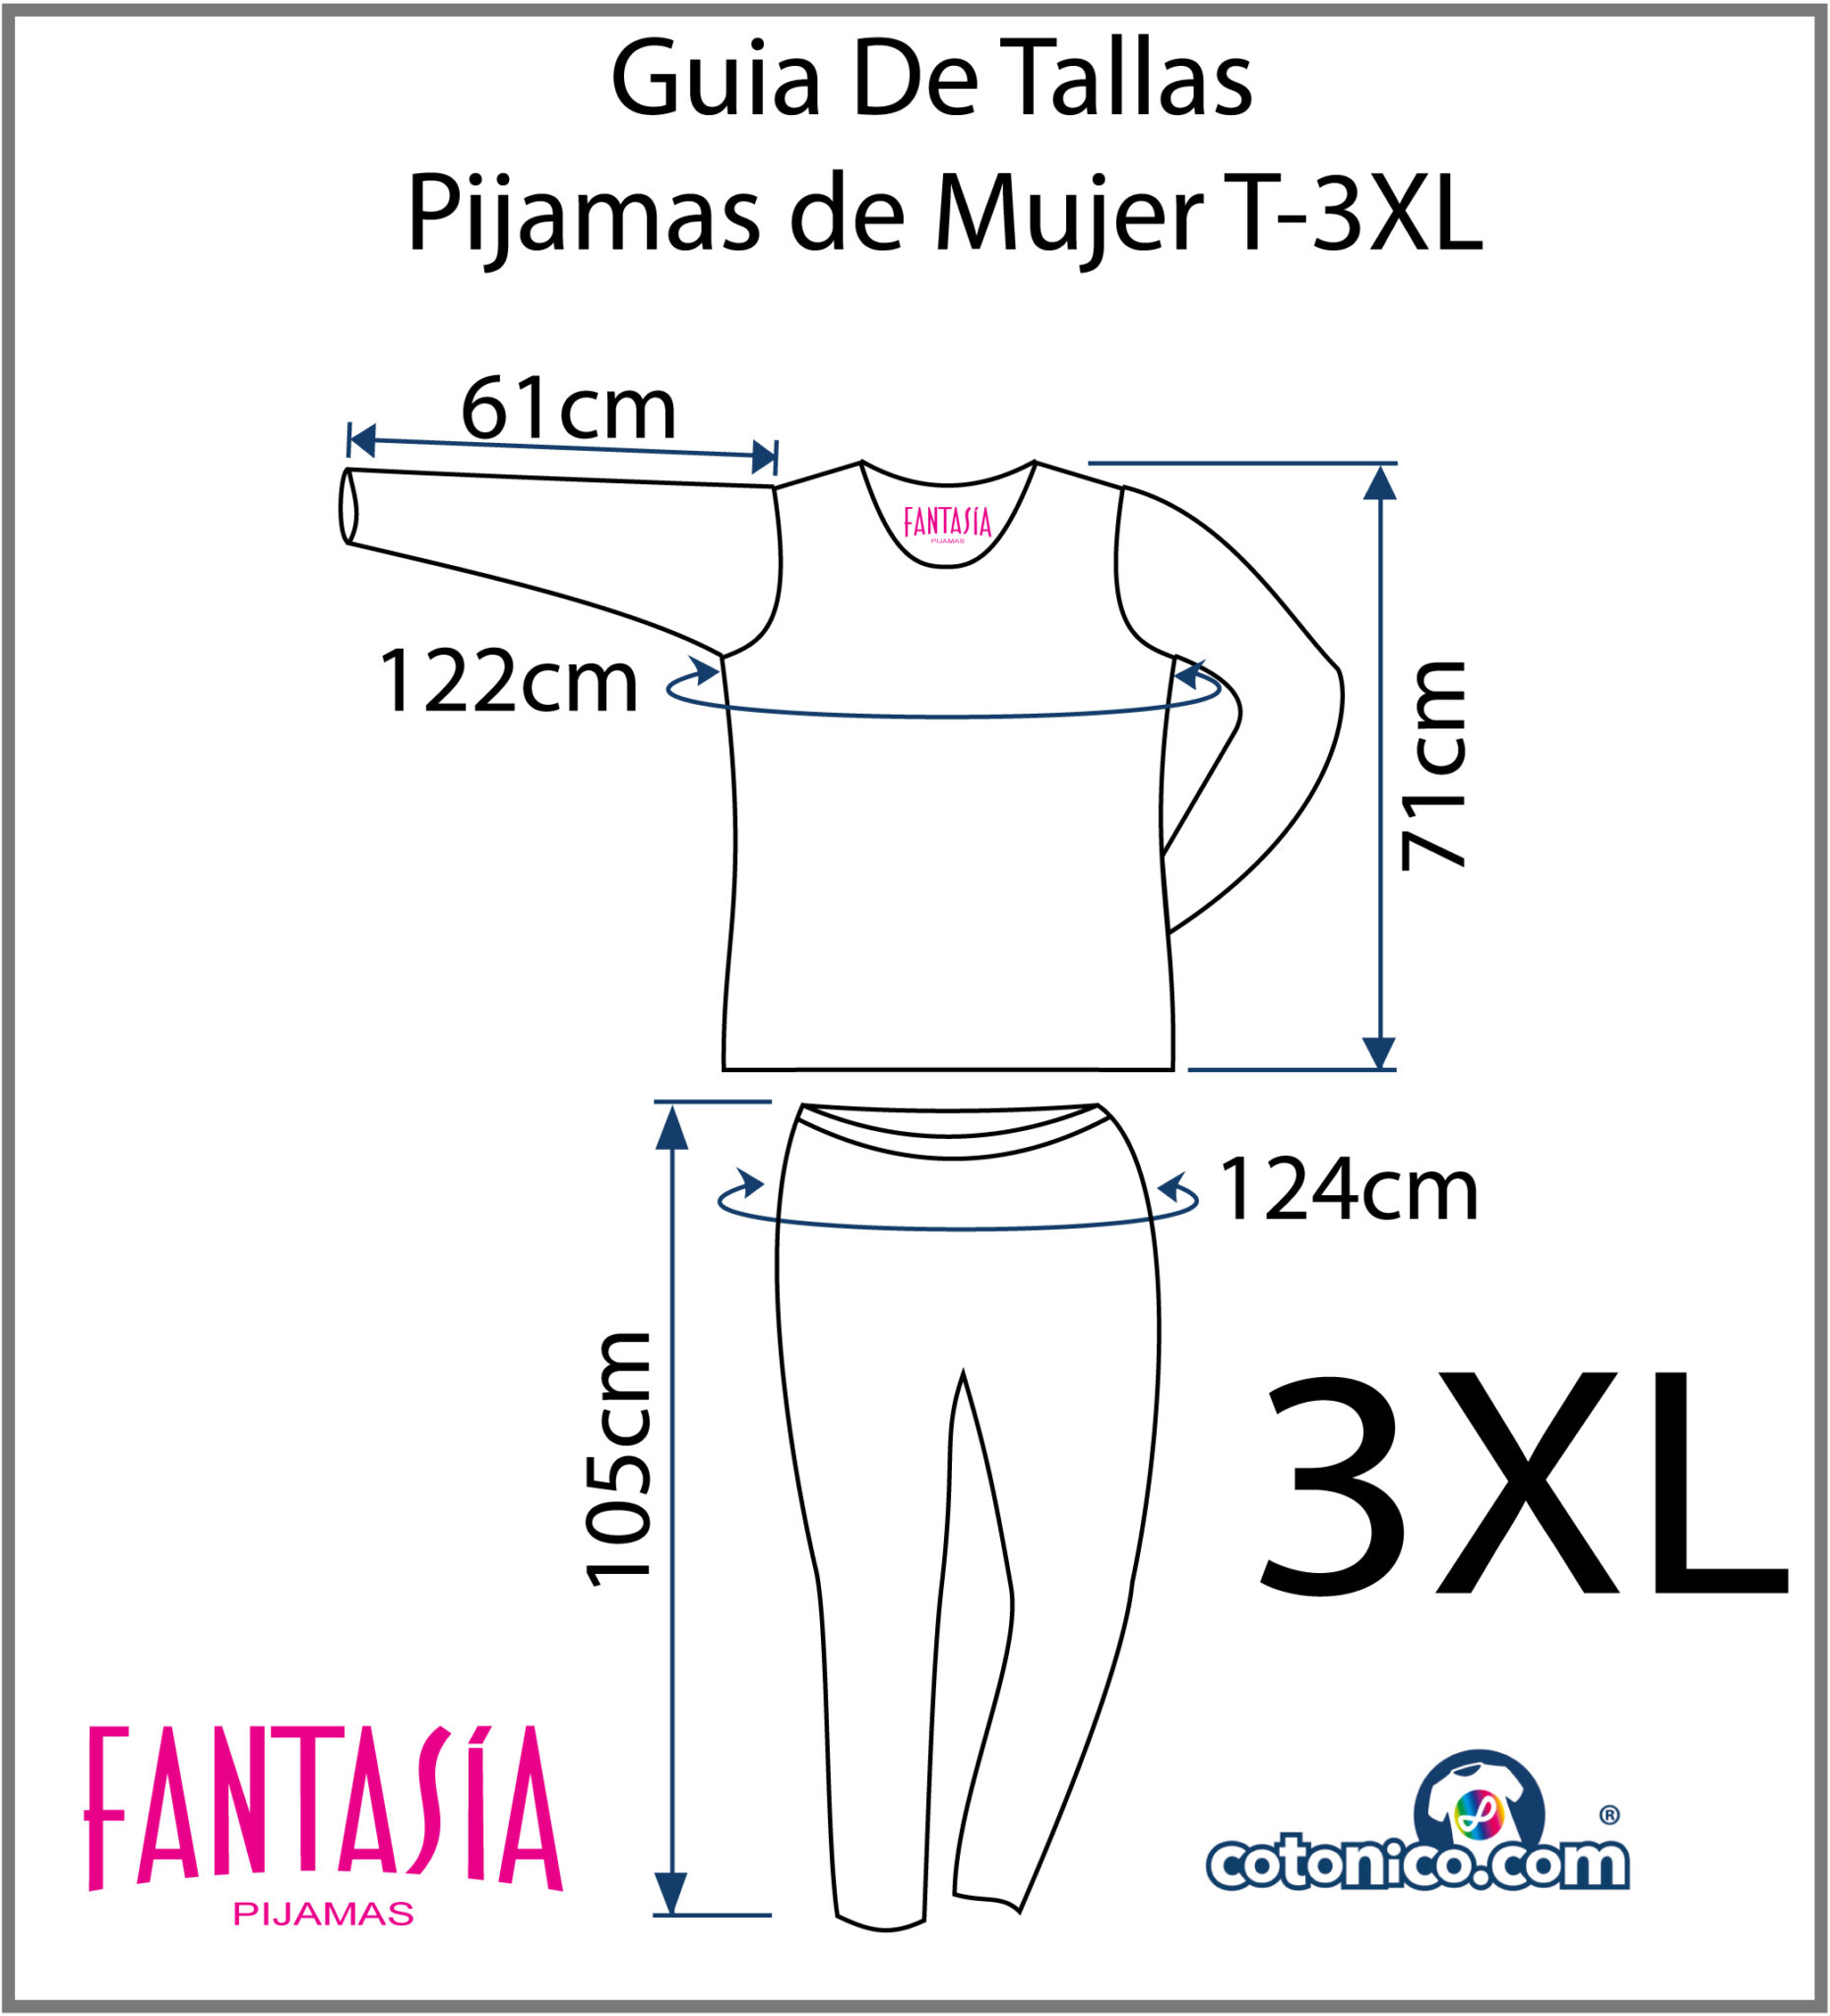 Guia-De-Tallas-Pijamas-De-Mujer-3XL